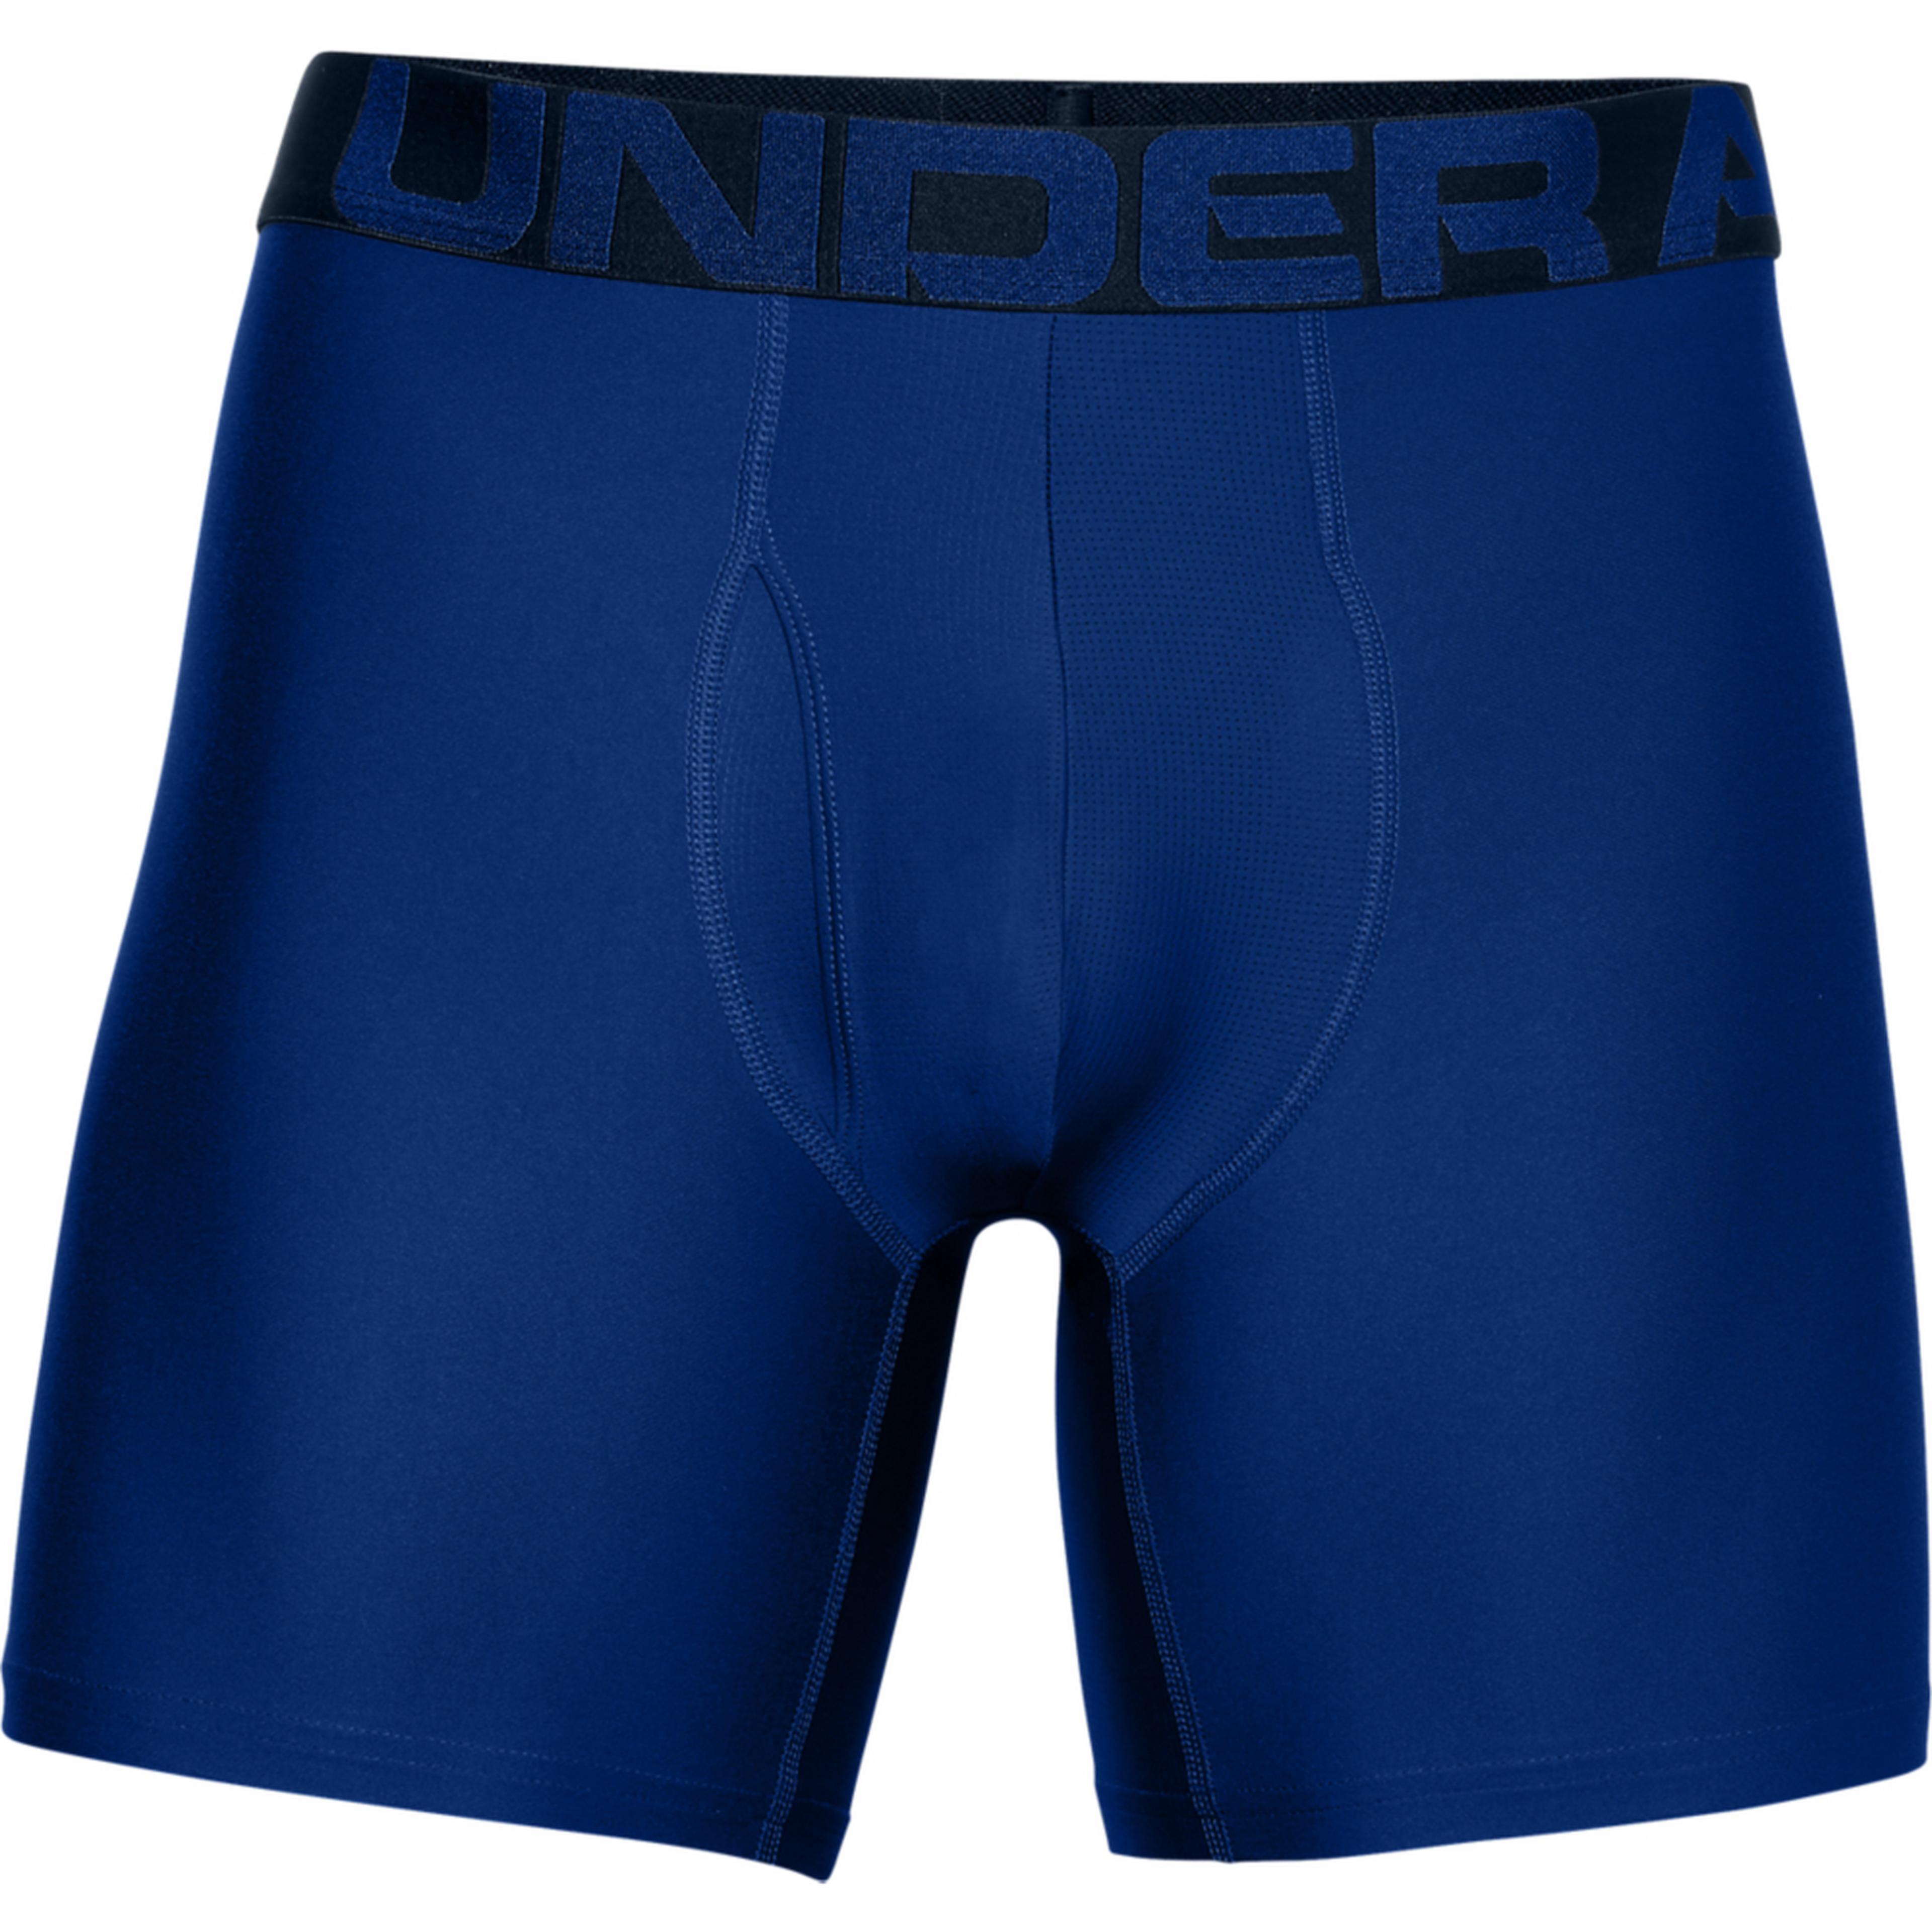 Blue Men`s Underpants Lying on the Floor, Knitted Underwear